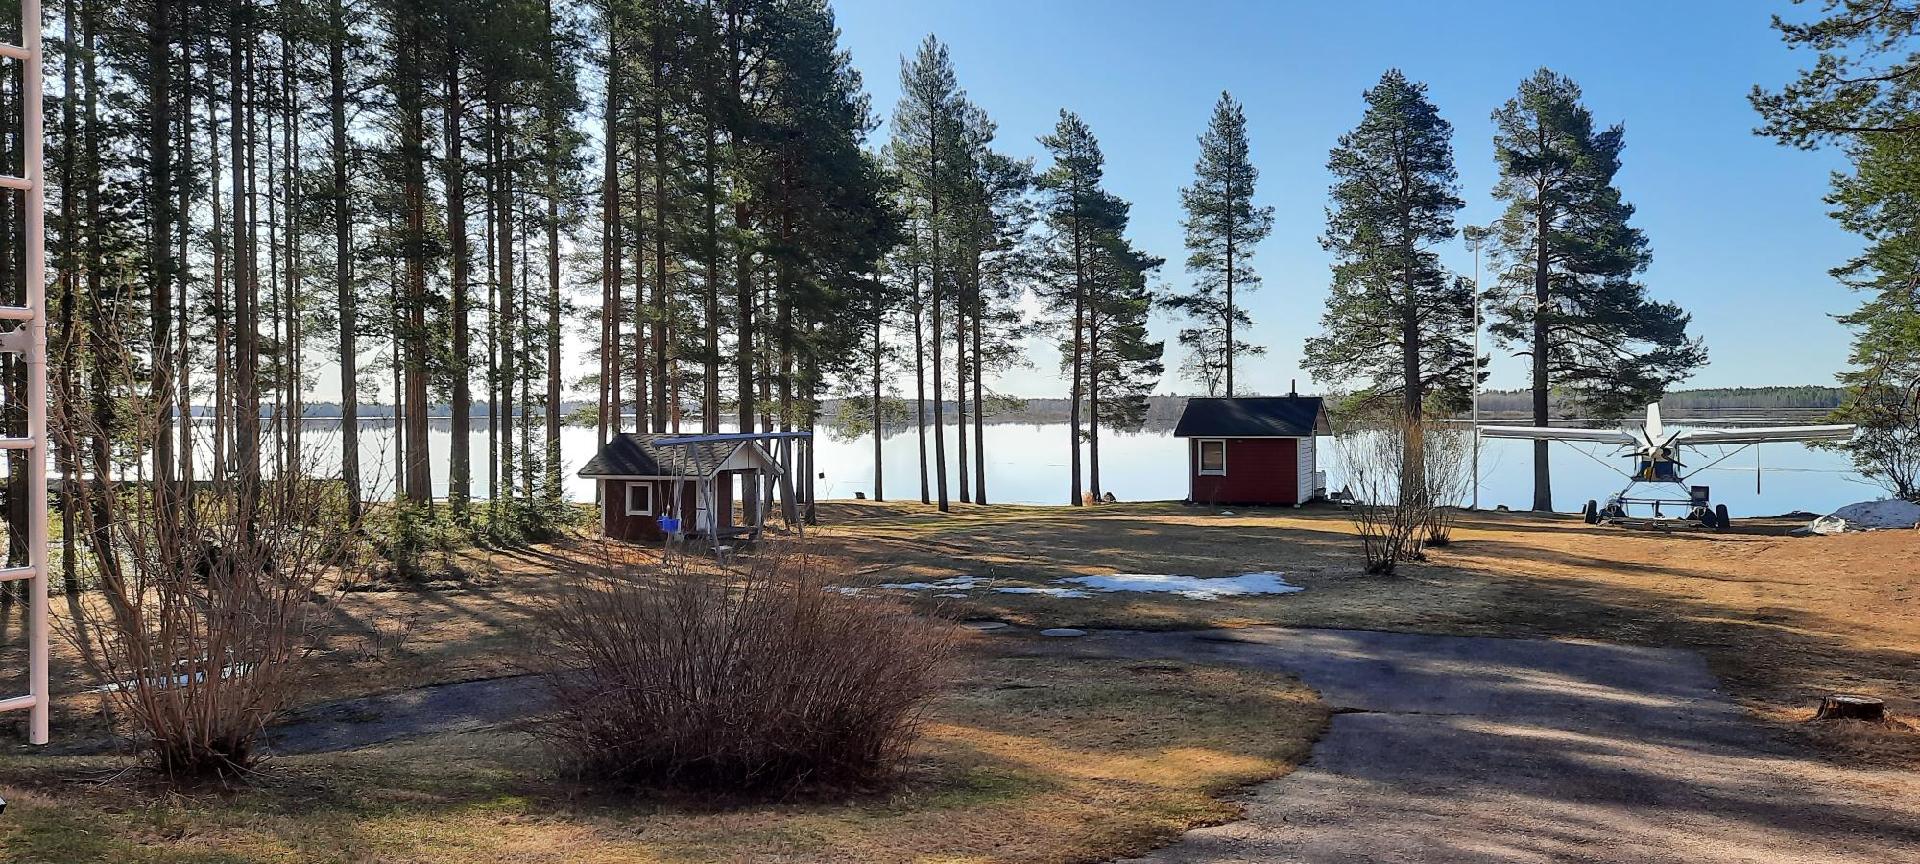 Siuruantie 163, Pudasjärvi, Pudasjärvi